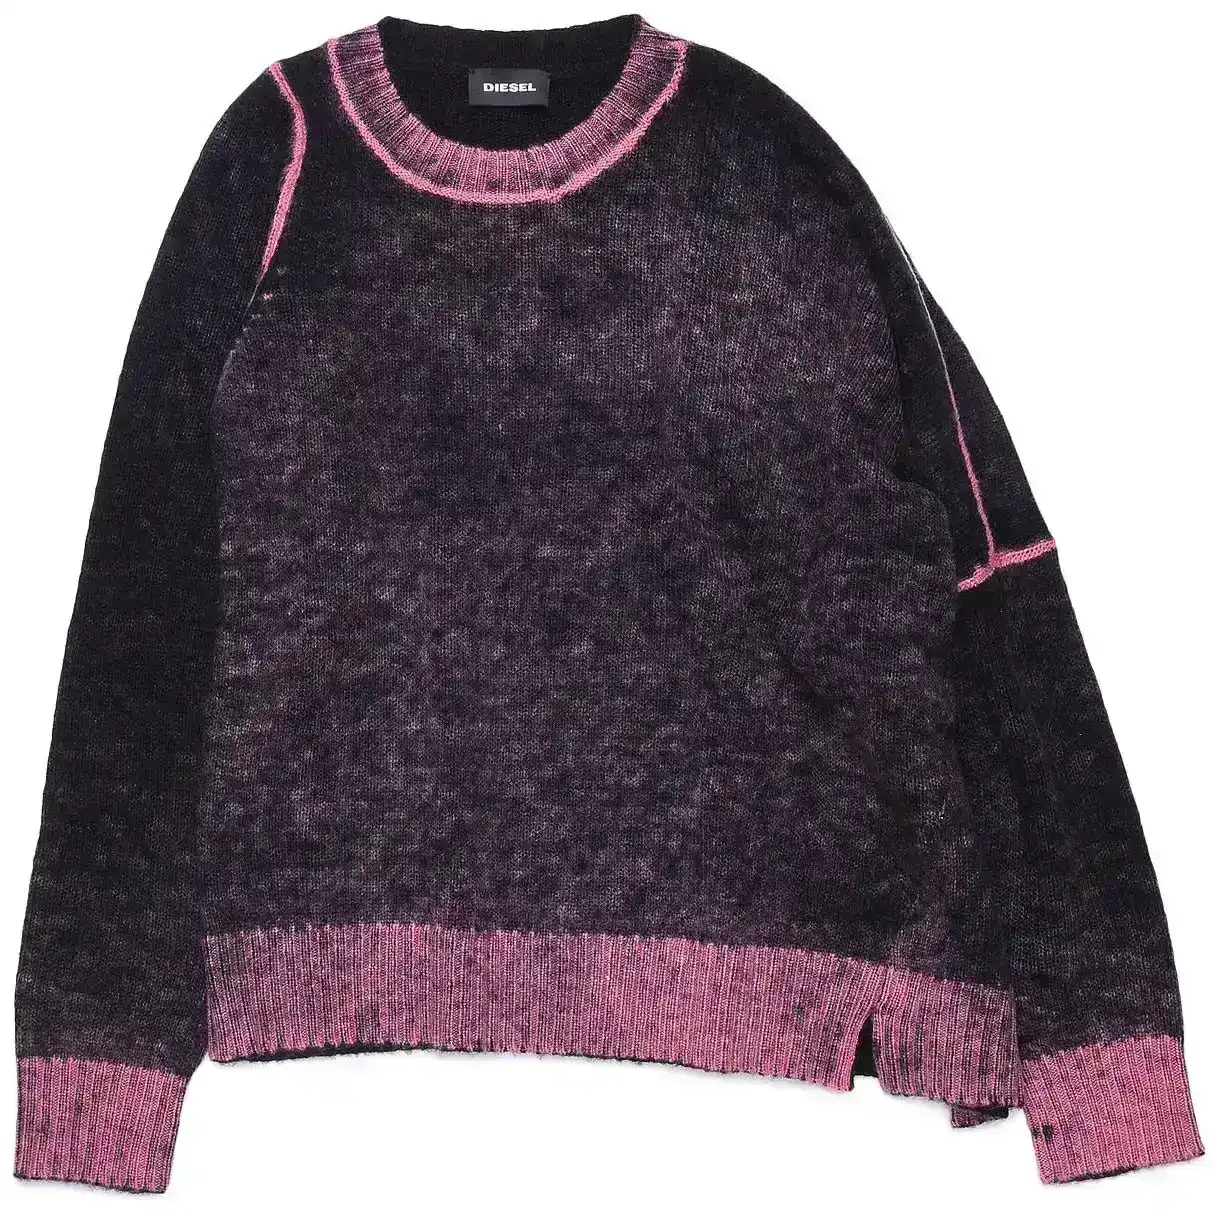 Diesel Girls Black Asymmetrical Wool Sweater with Pink Stitching